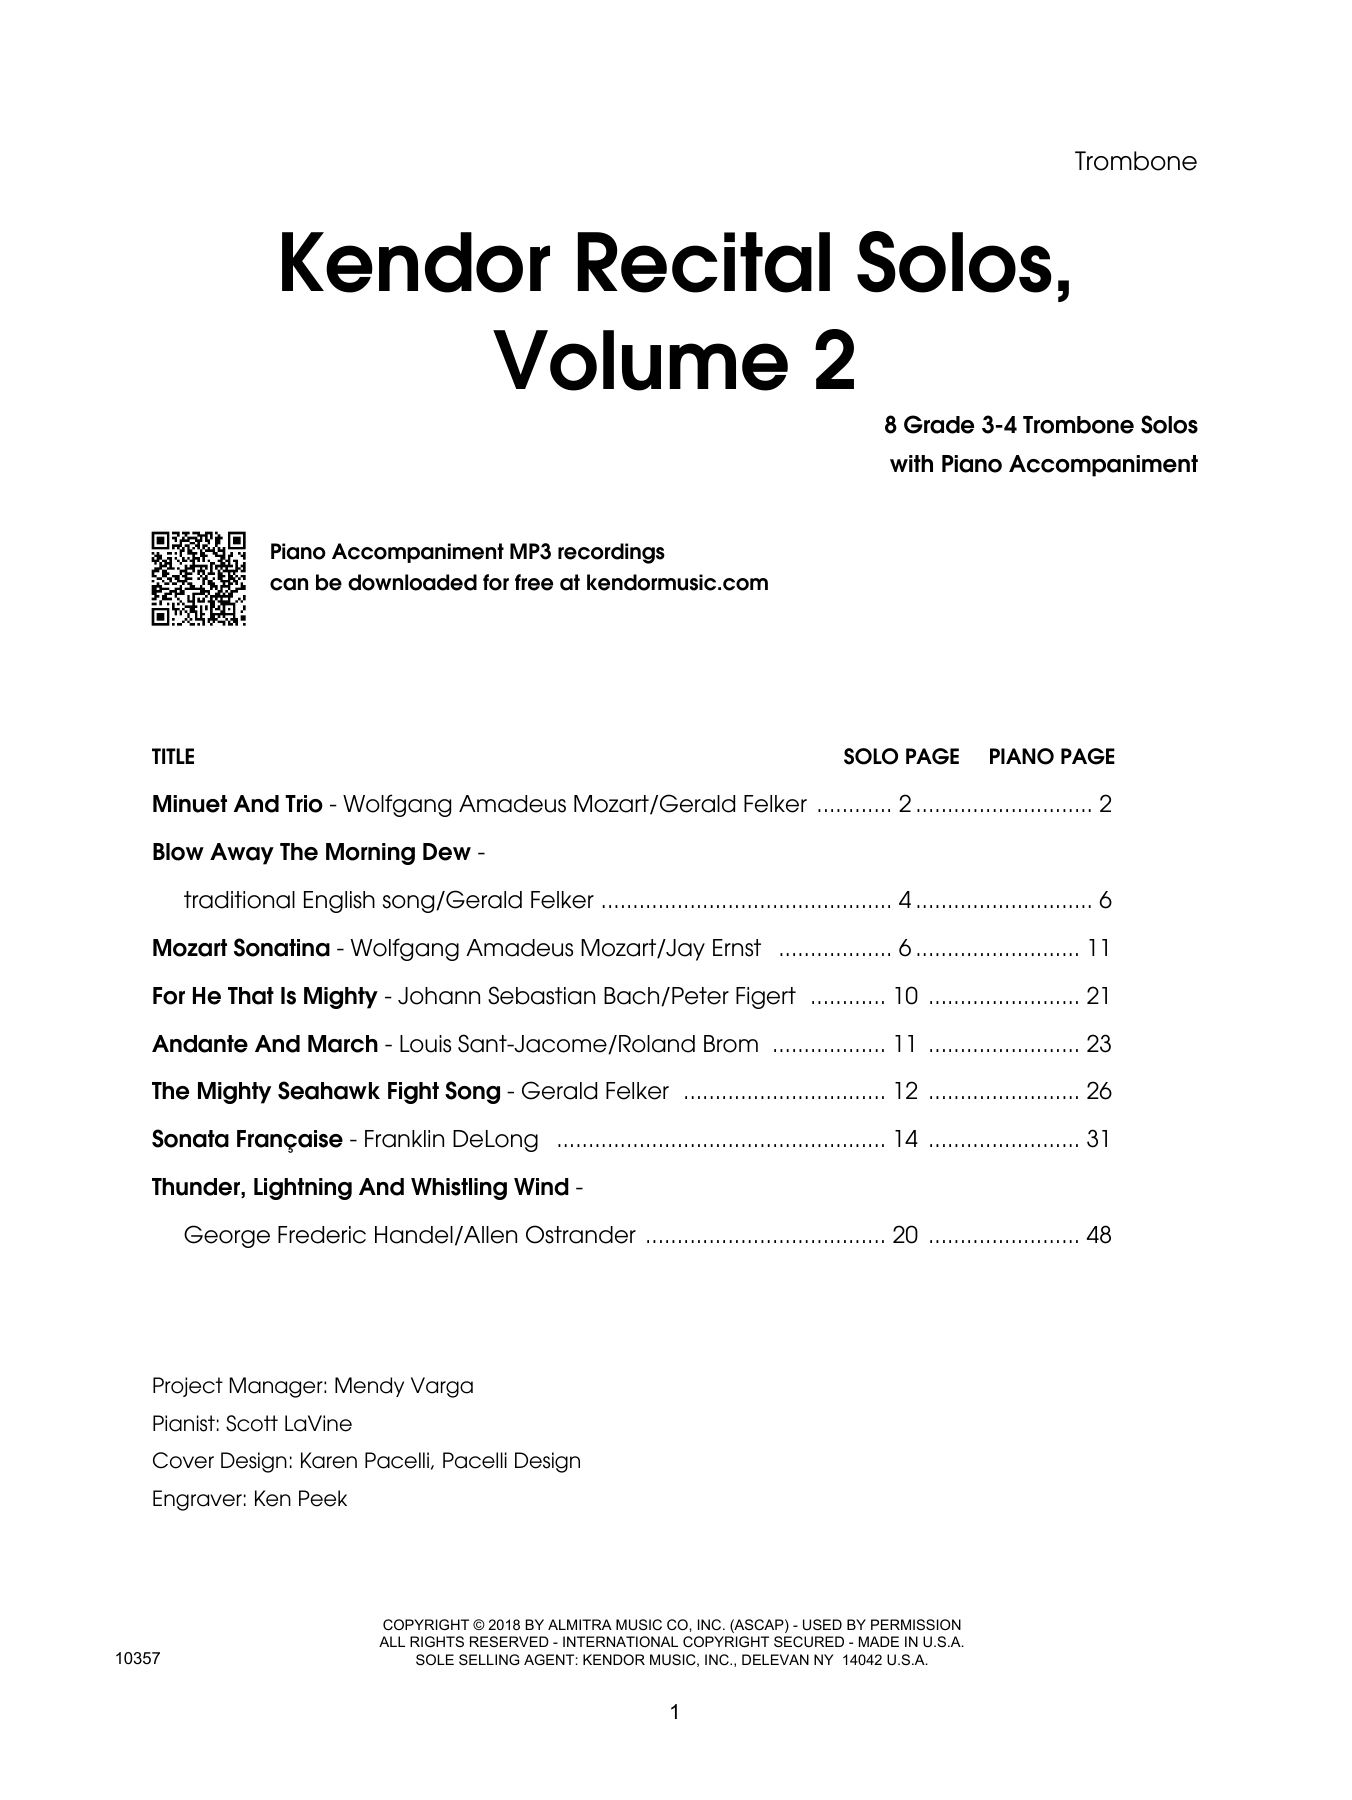 Kendor Recital Solos, Volume 2 - Trombone - Trombone (Brass Solo) von Various